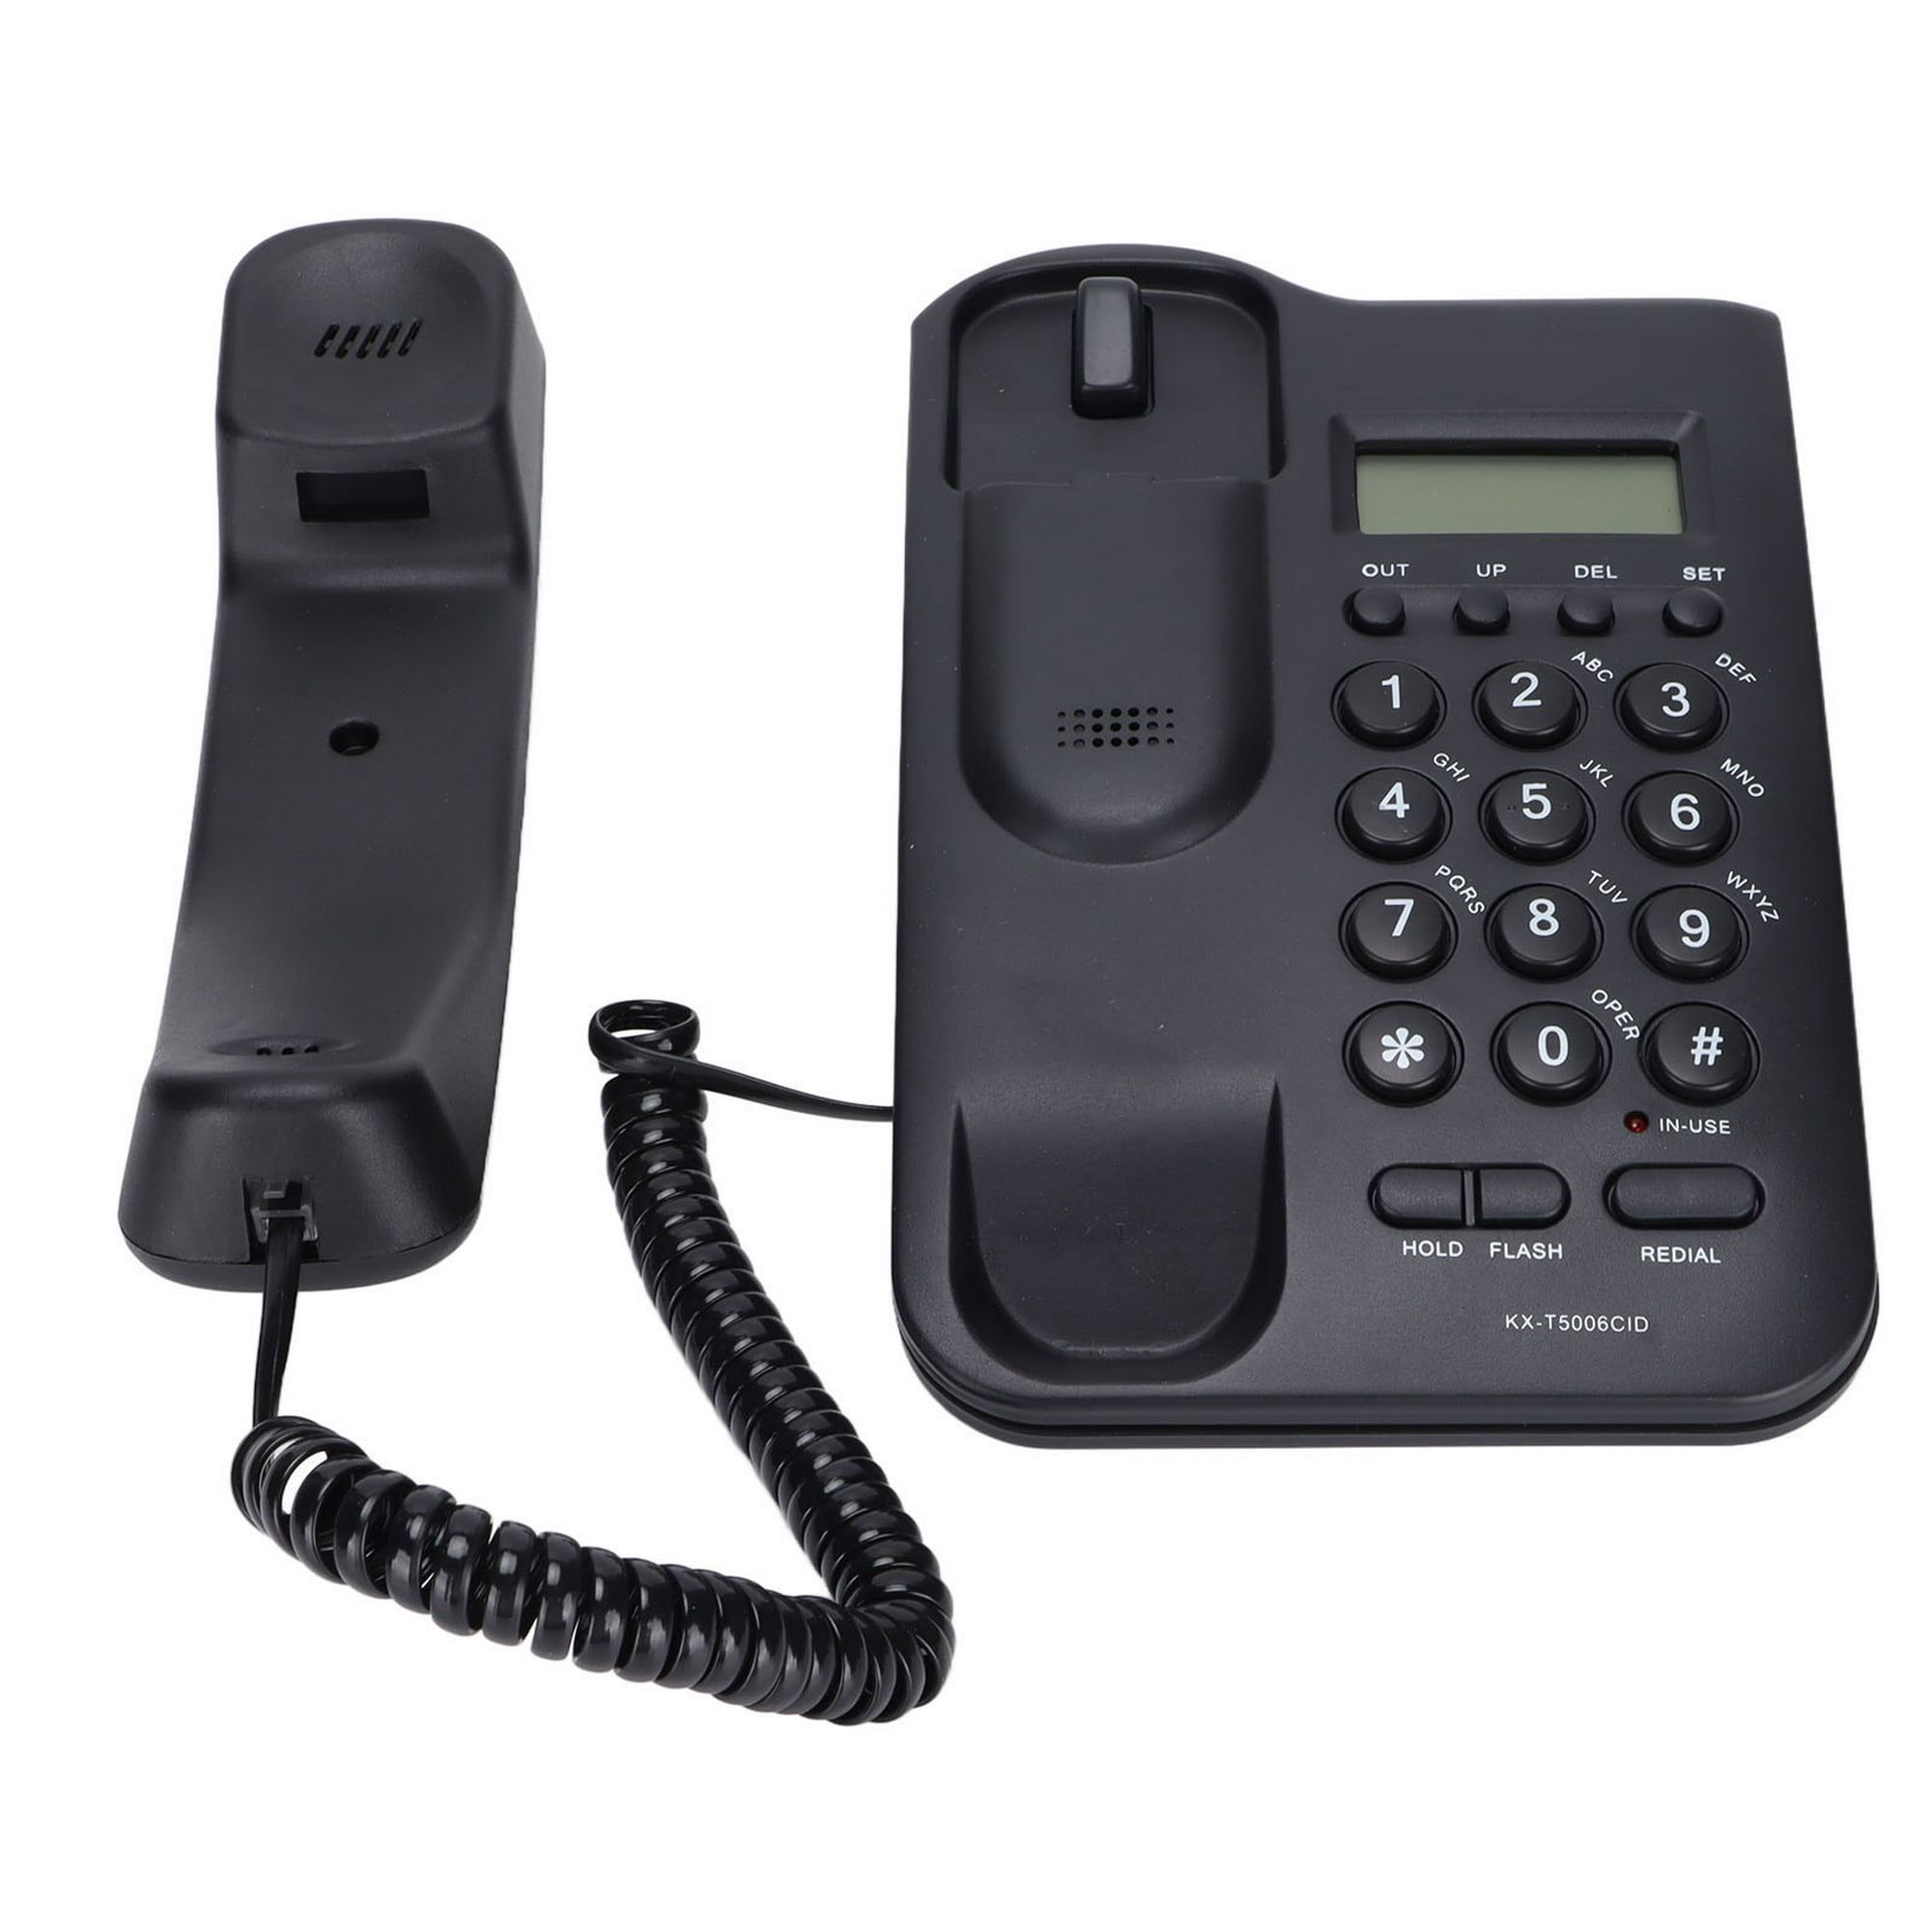 Teléfono con cable, teléfono fijo con marcación semimanos libres, teléfono  de oficina, tecnología avanzada